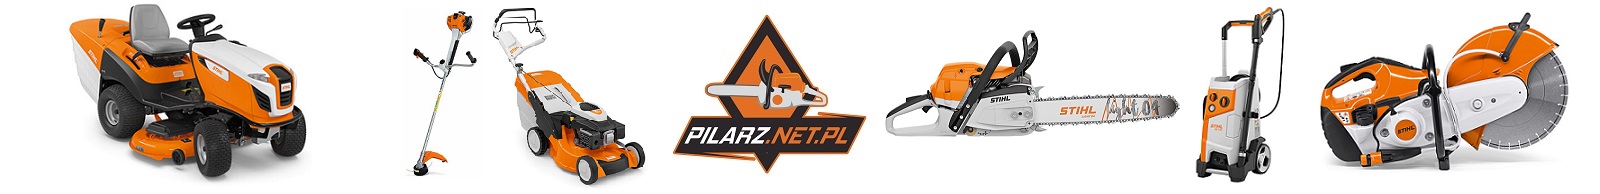 PILARZ.NET.PL Bartosz Oleksy